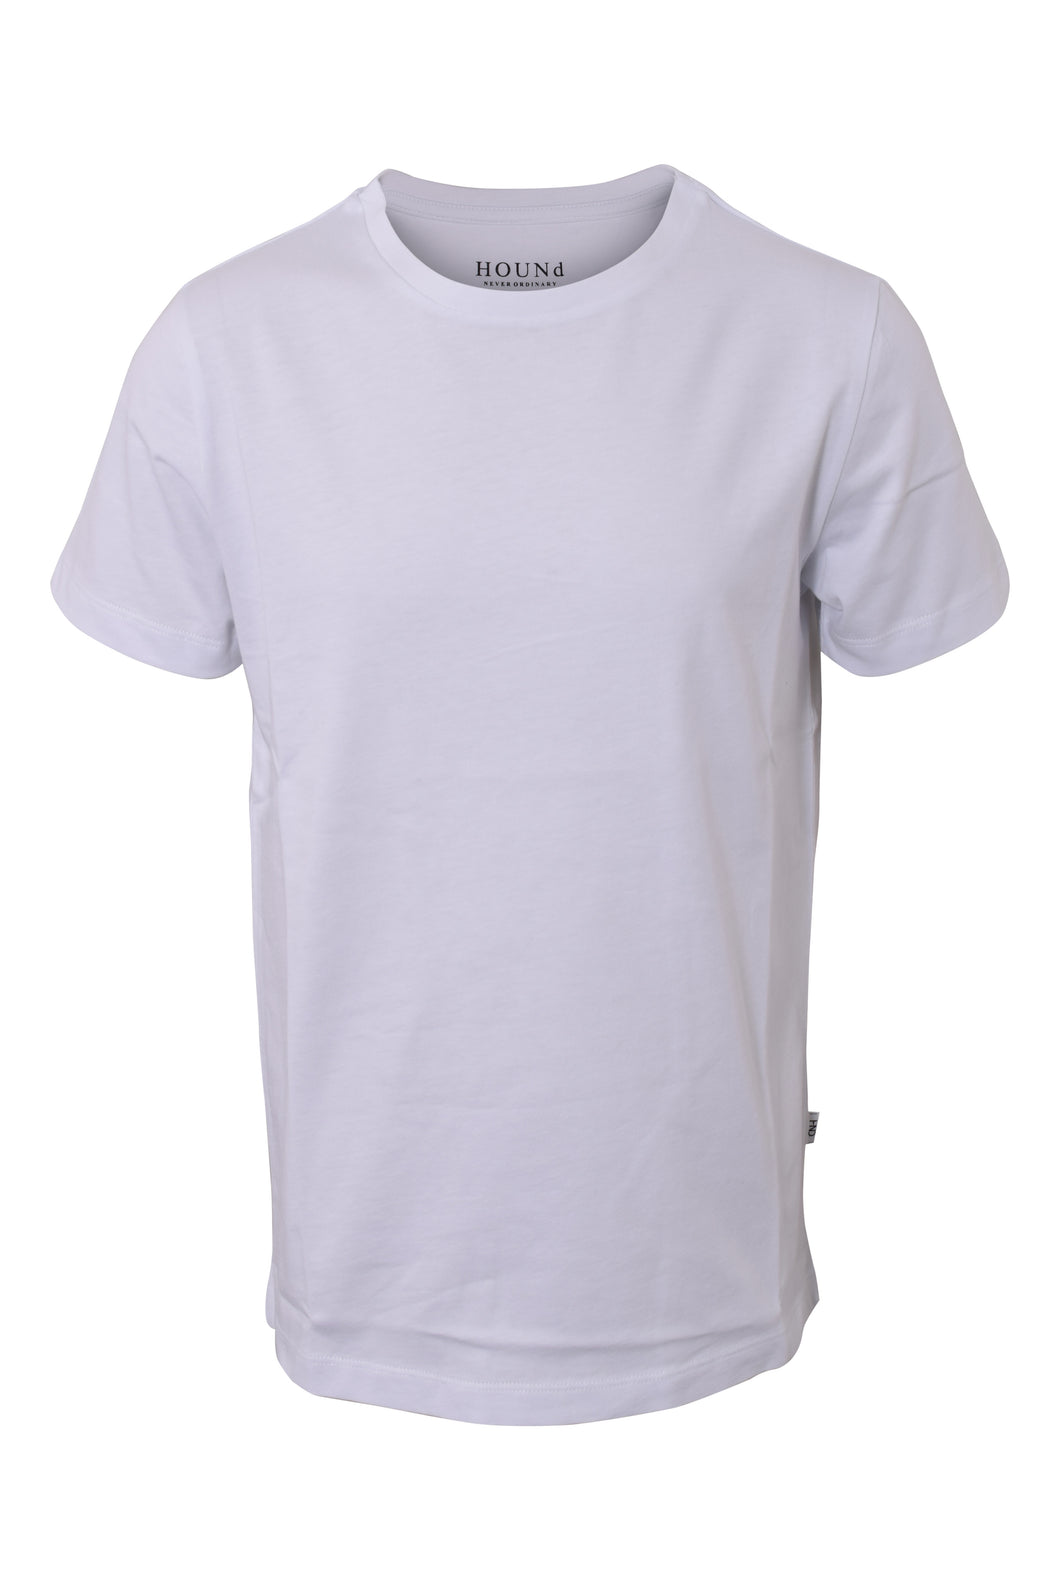 Hound 2990044 Basis T-Shirt 2990044 100 White